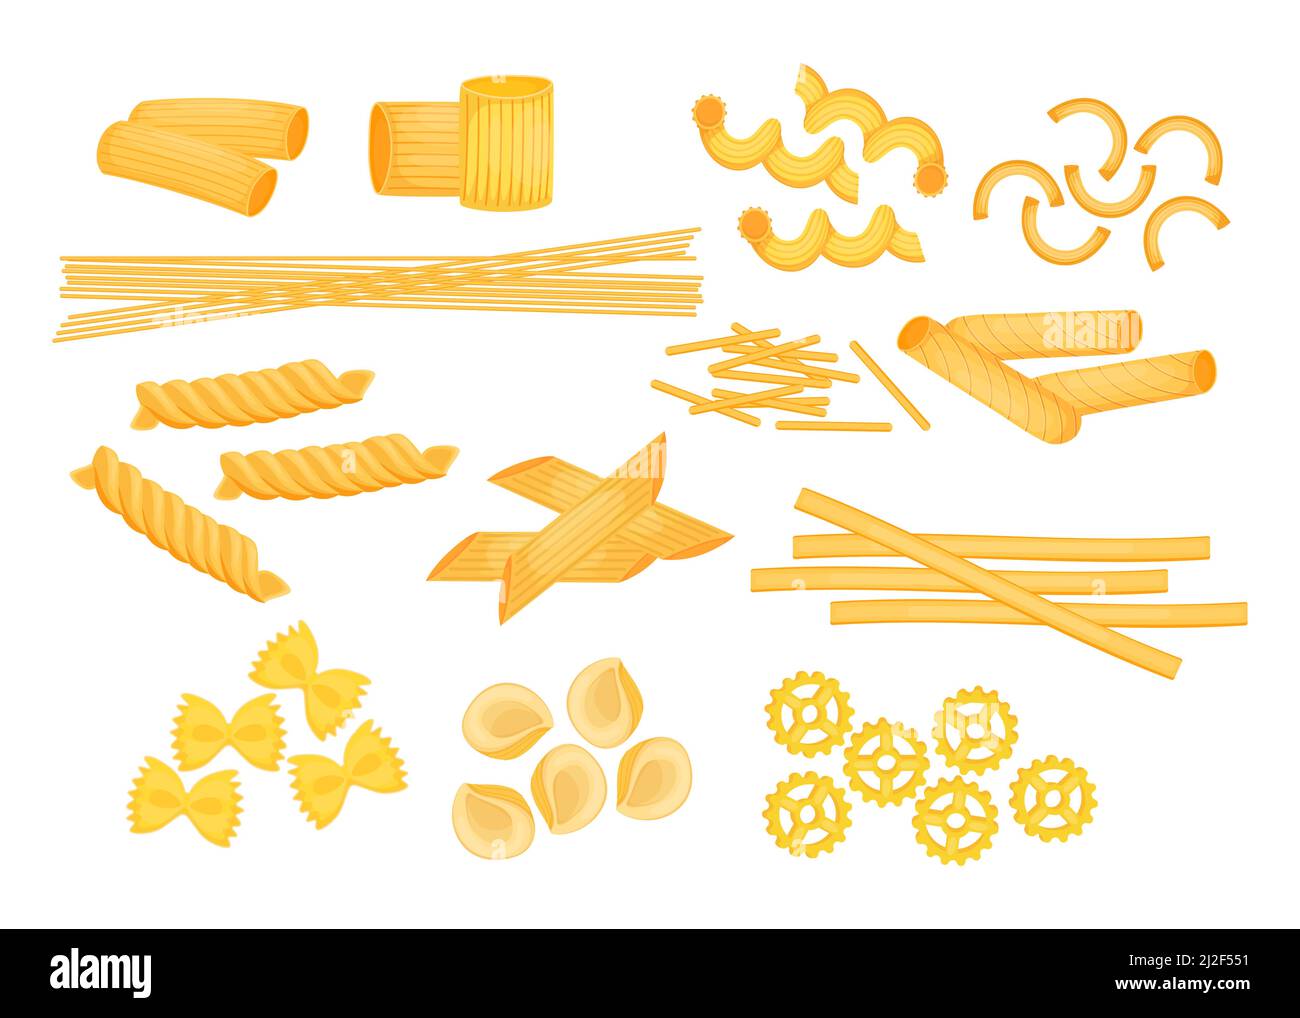 Premium Vector  Types of pasta illustration. labeled italian cuisine shapes  explanation